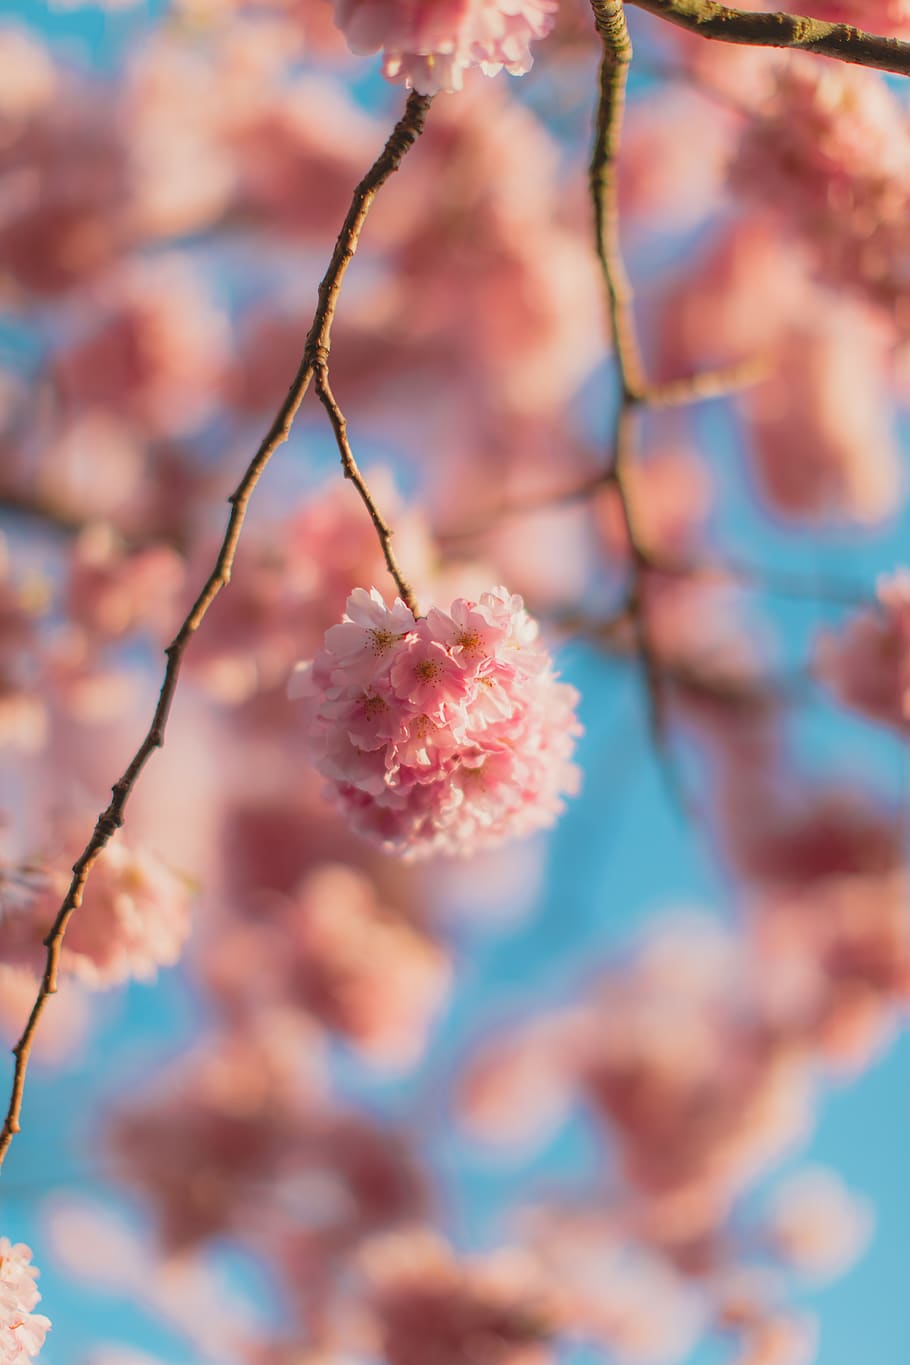 HD wallpaper: pink flower, plant, cherry blossom, sky, blue, spring, petal